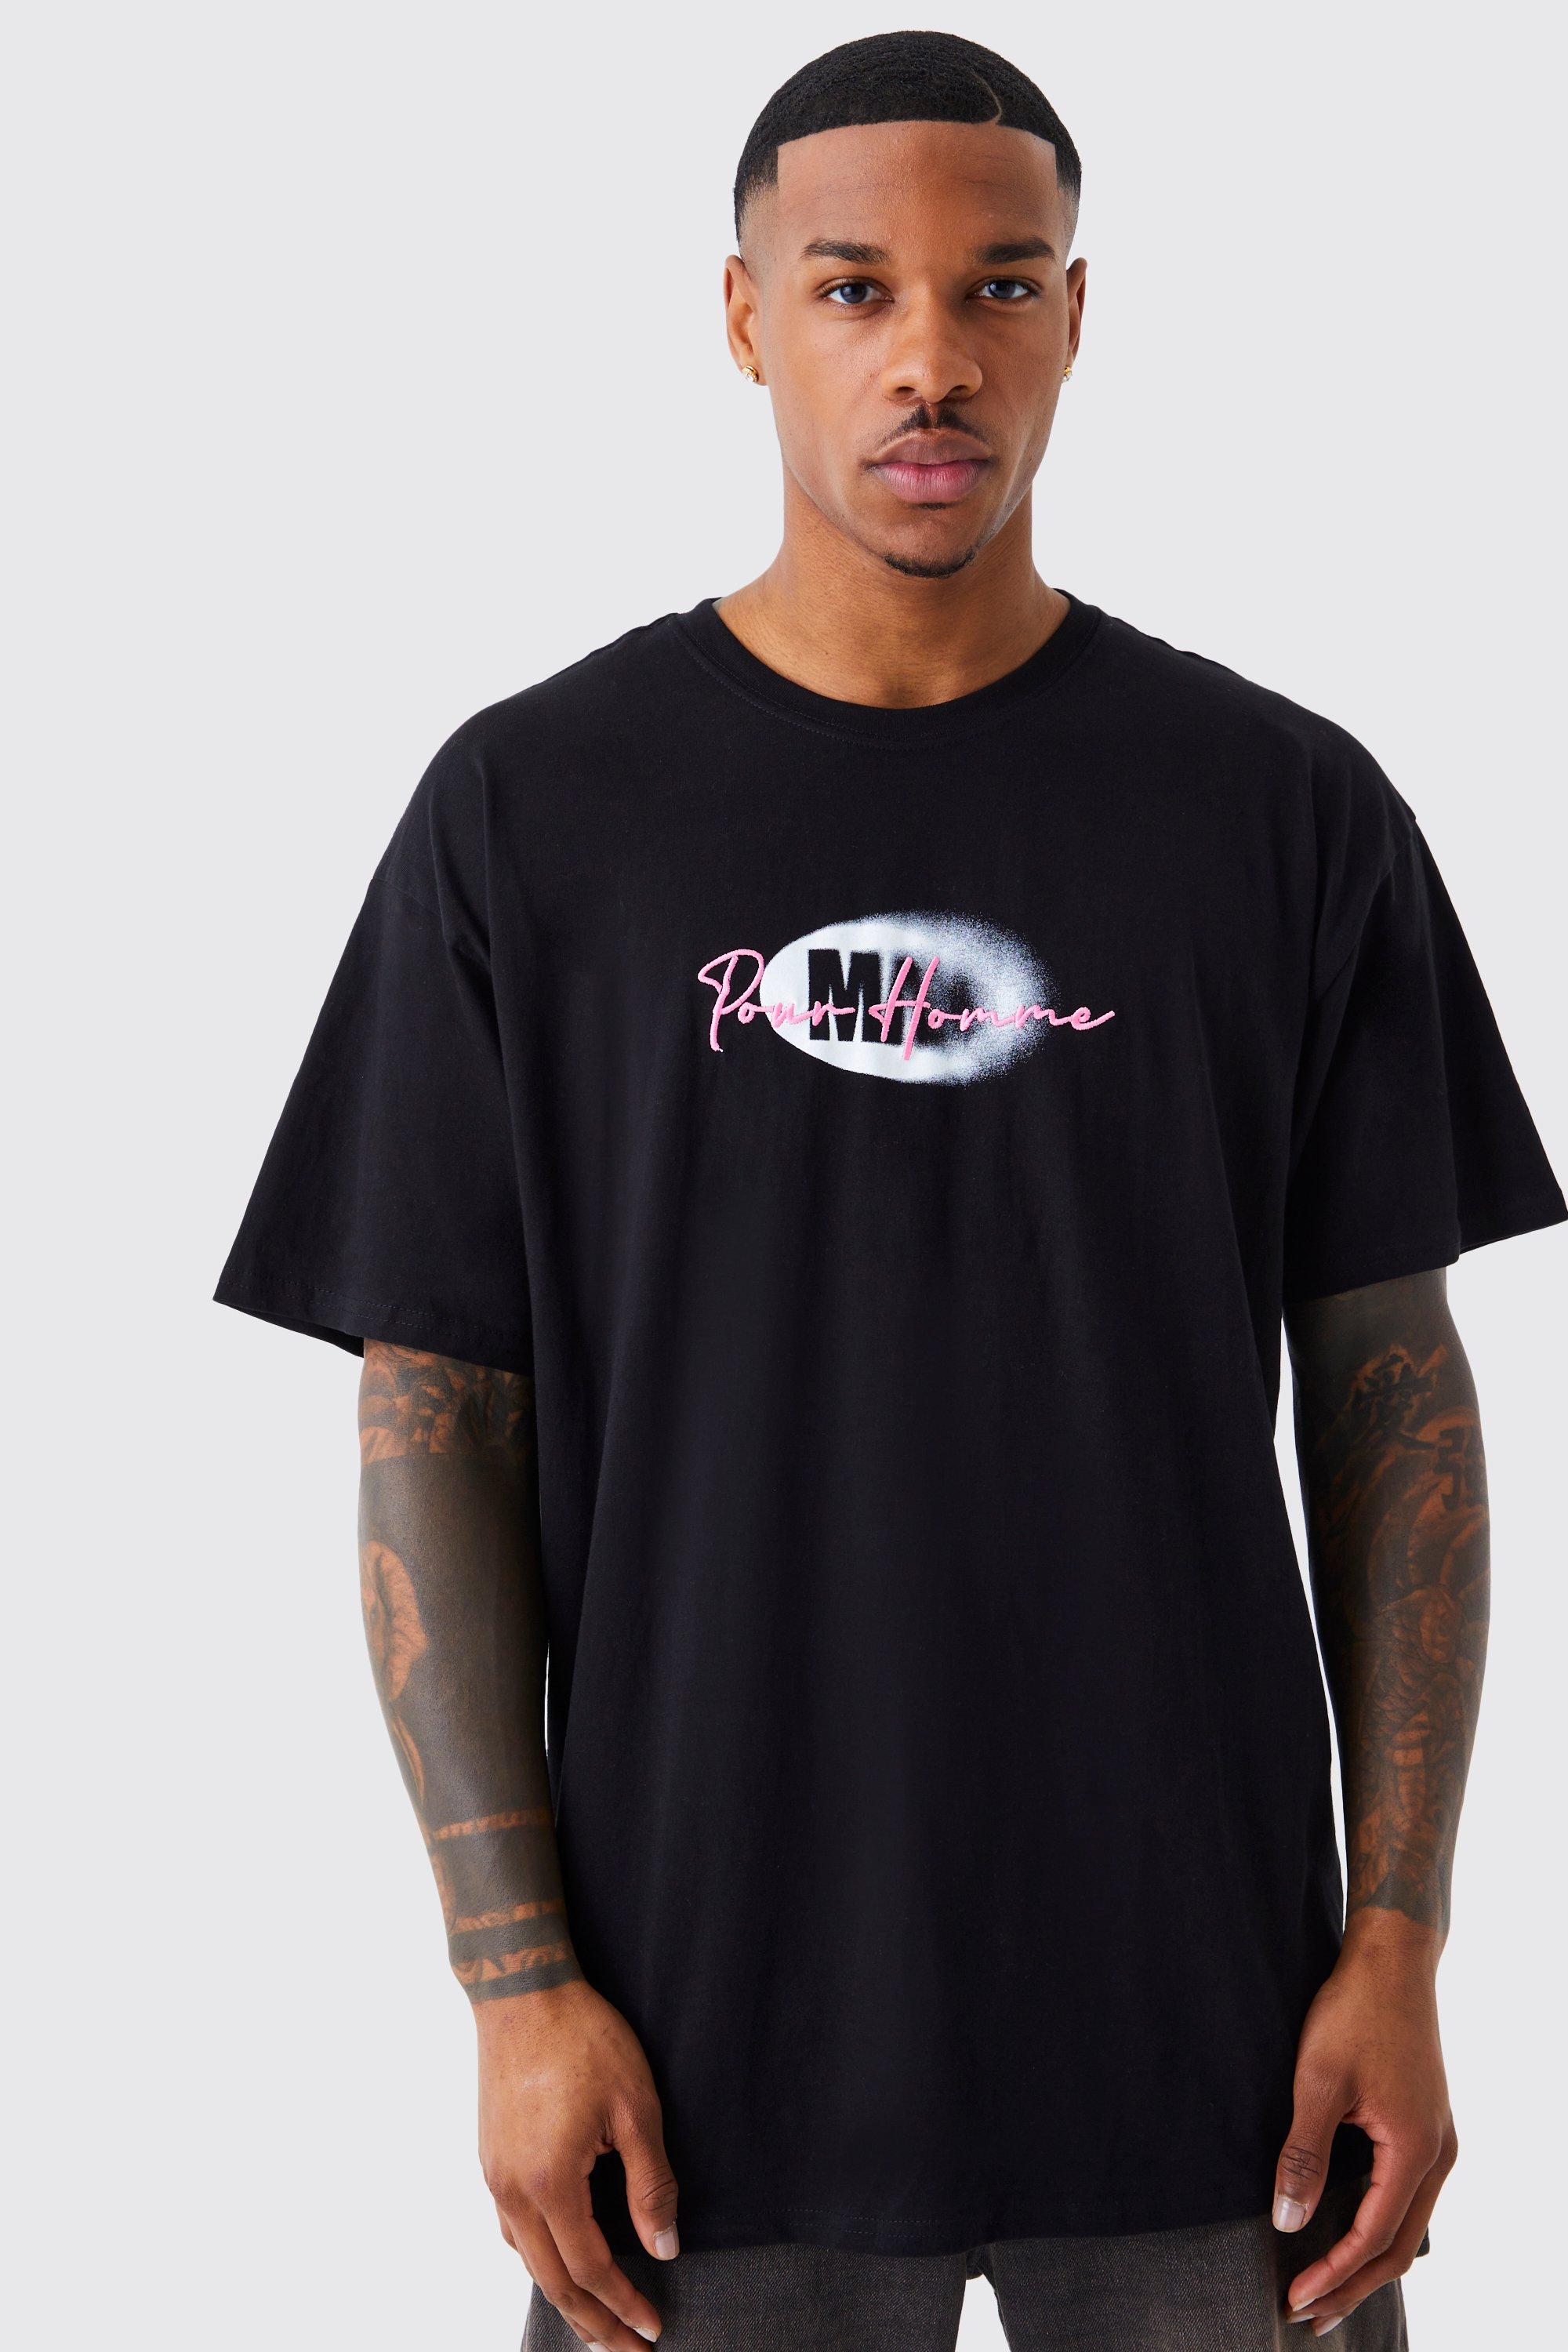 men's oversized pour homme embroidery t-shirt - black - s, black